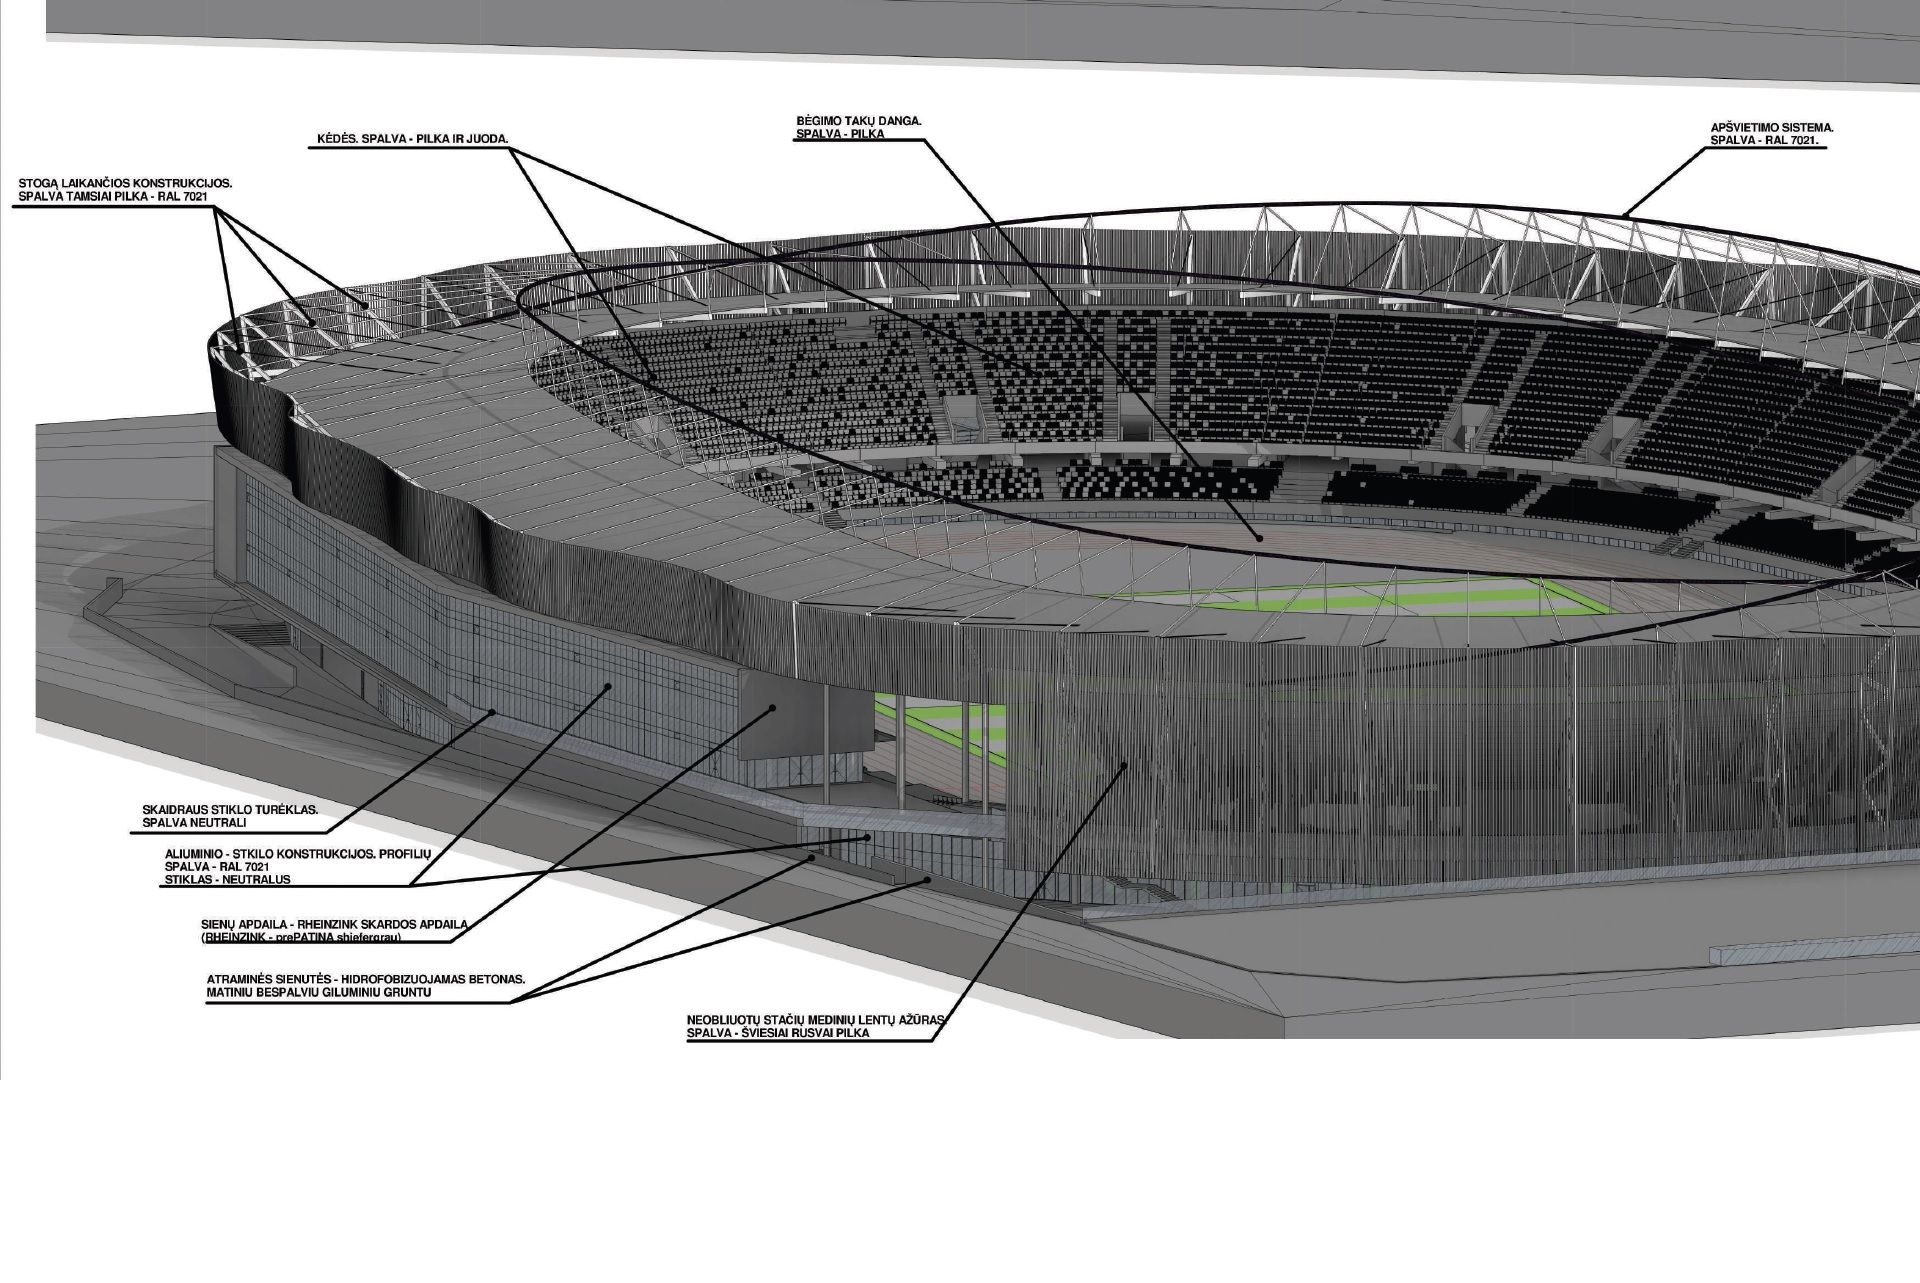 Click image for larger version  Name:	stadiono apsvietimas.jpg Views:	1 Size:	379,0 kB ID:	1953190